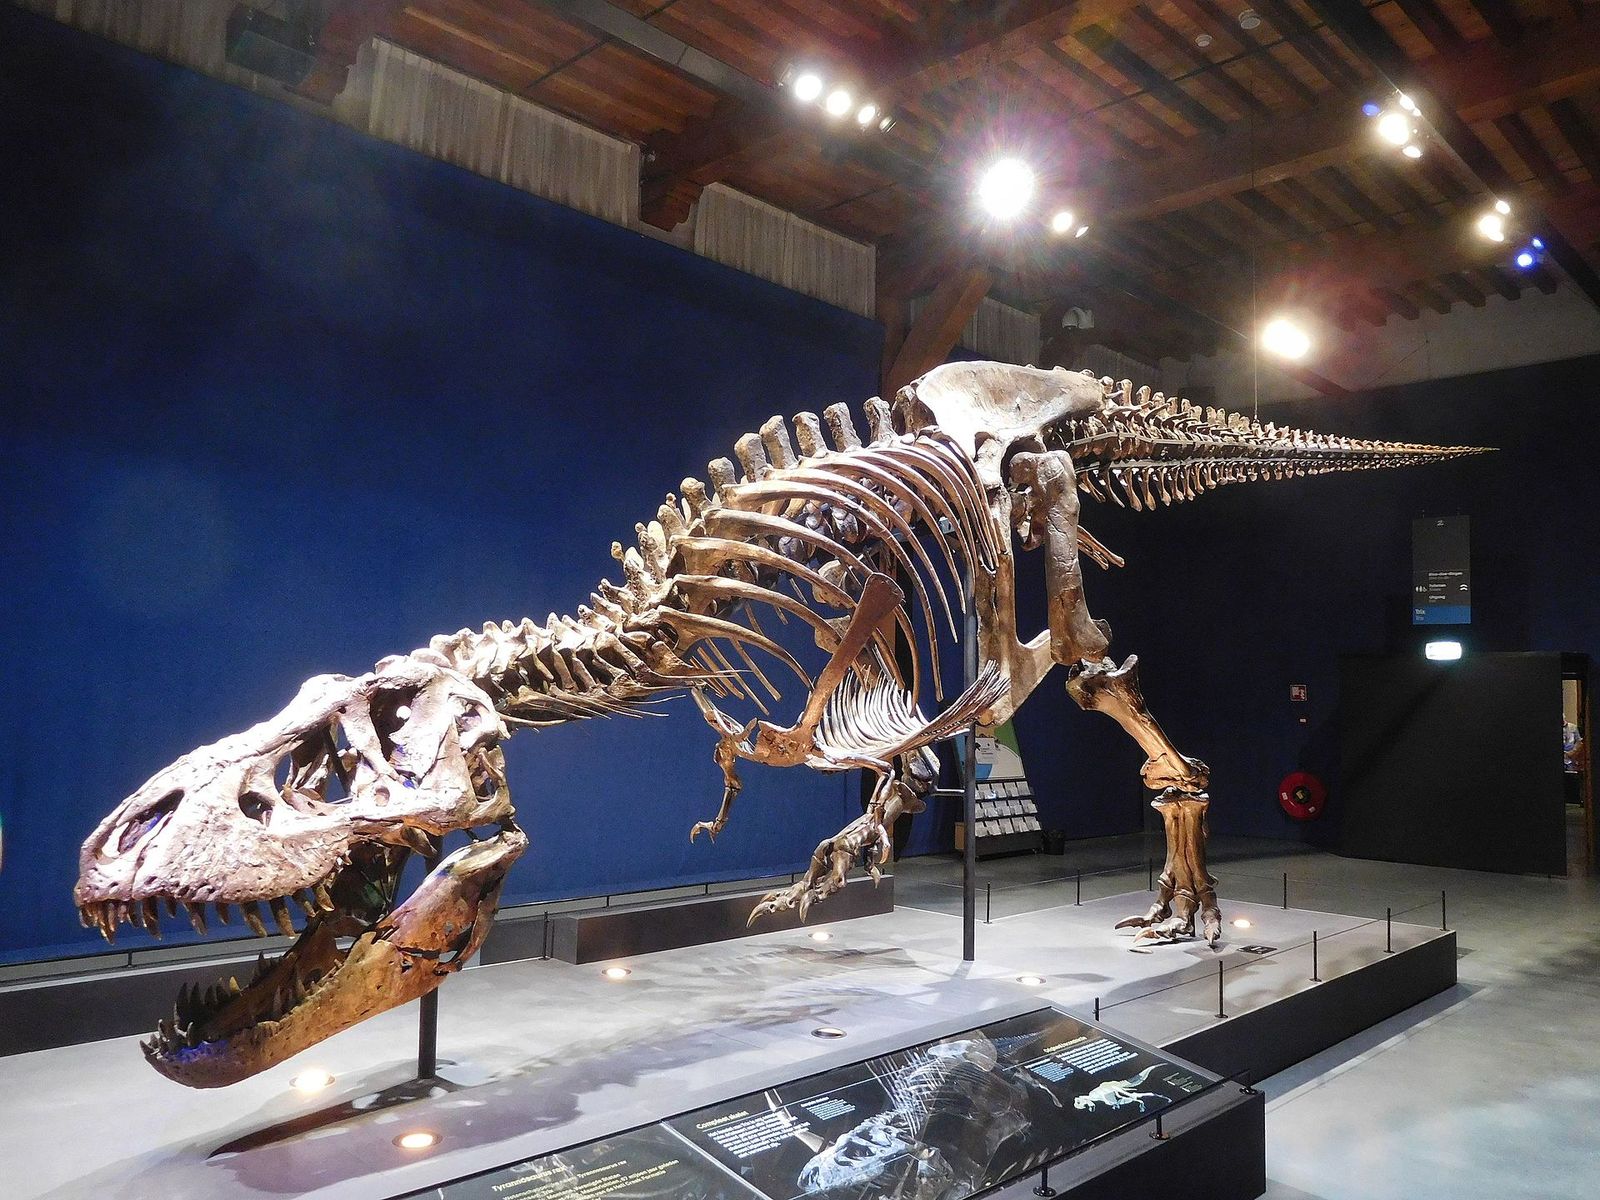 How Fast Did T. rex Run?  Princeton University Press